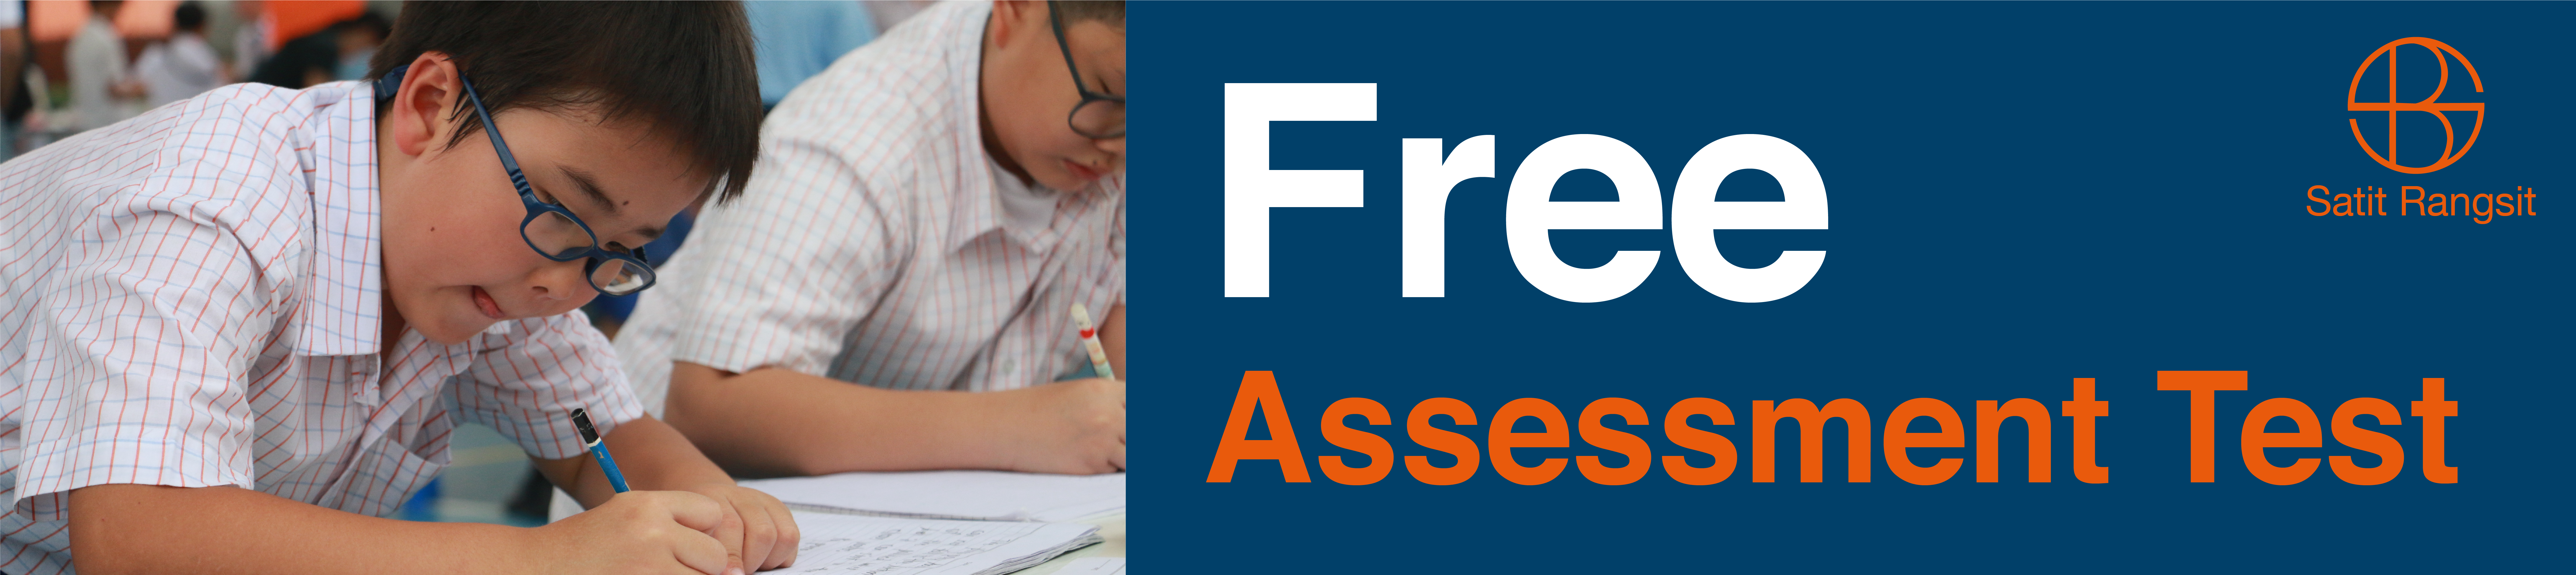 free assessment